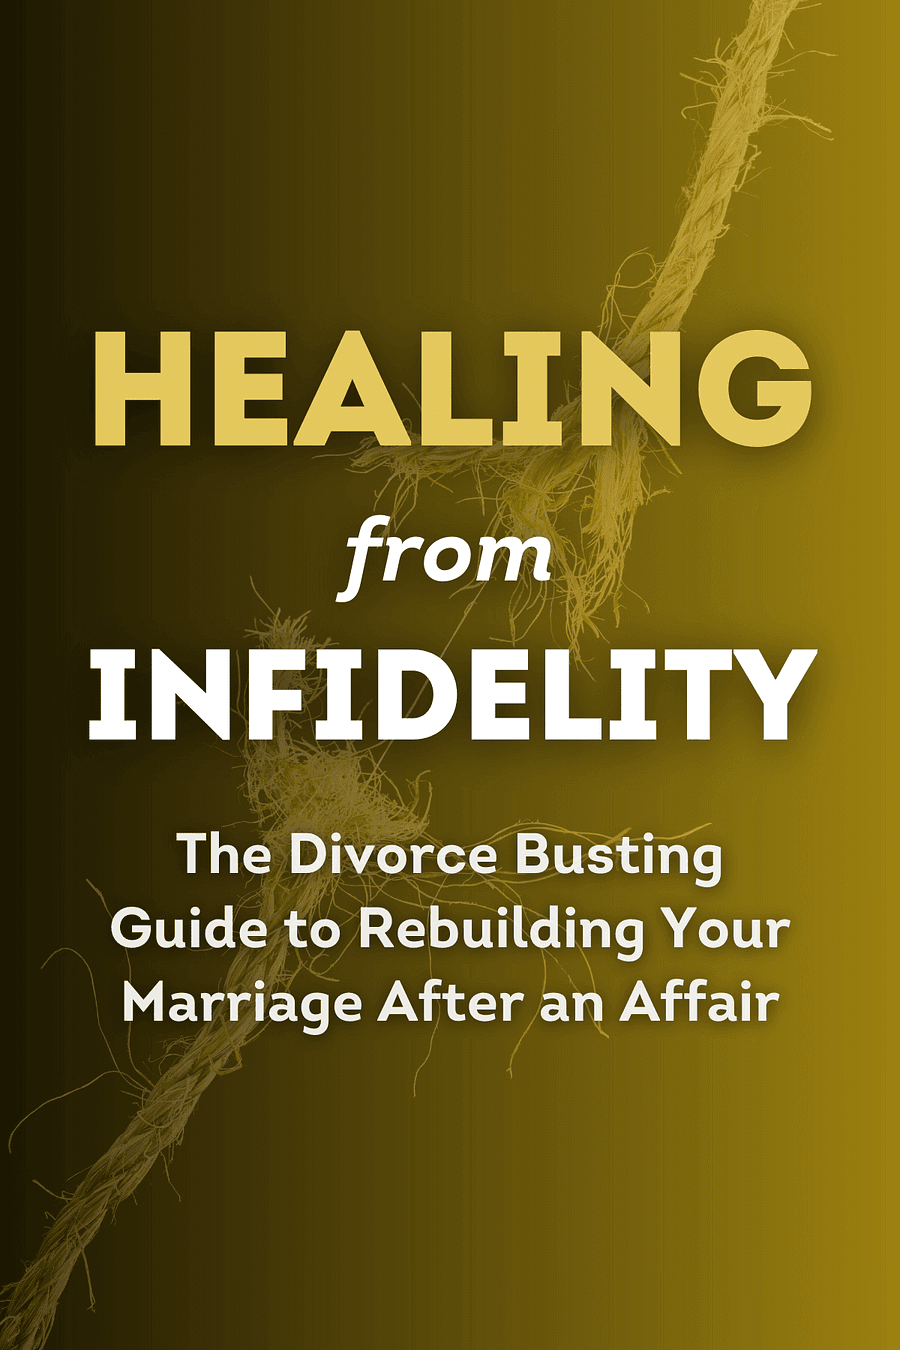 Healing from Infidelity by Michele Weiner-Davis - Book Summary